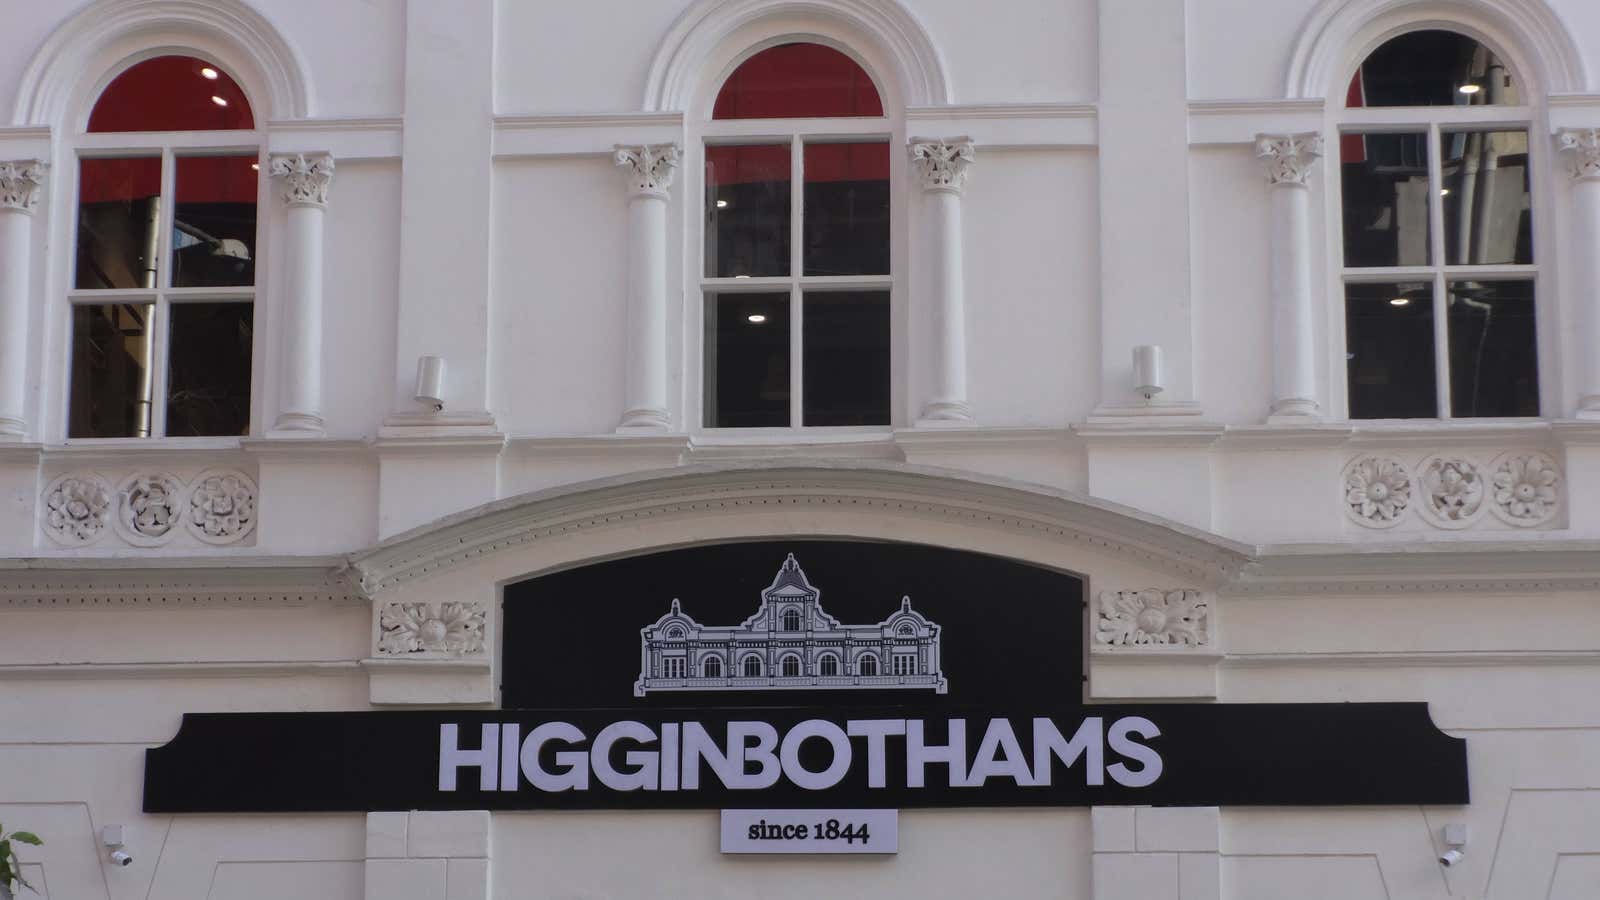 Higginbothams, the oldest bookshop in the home of Flipkart, gets a  colourful makeover